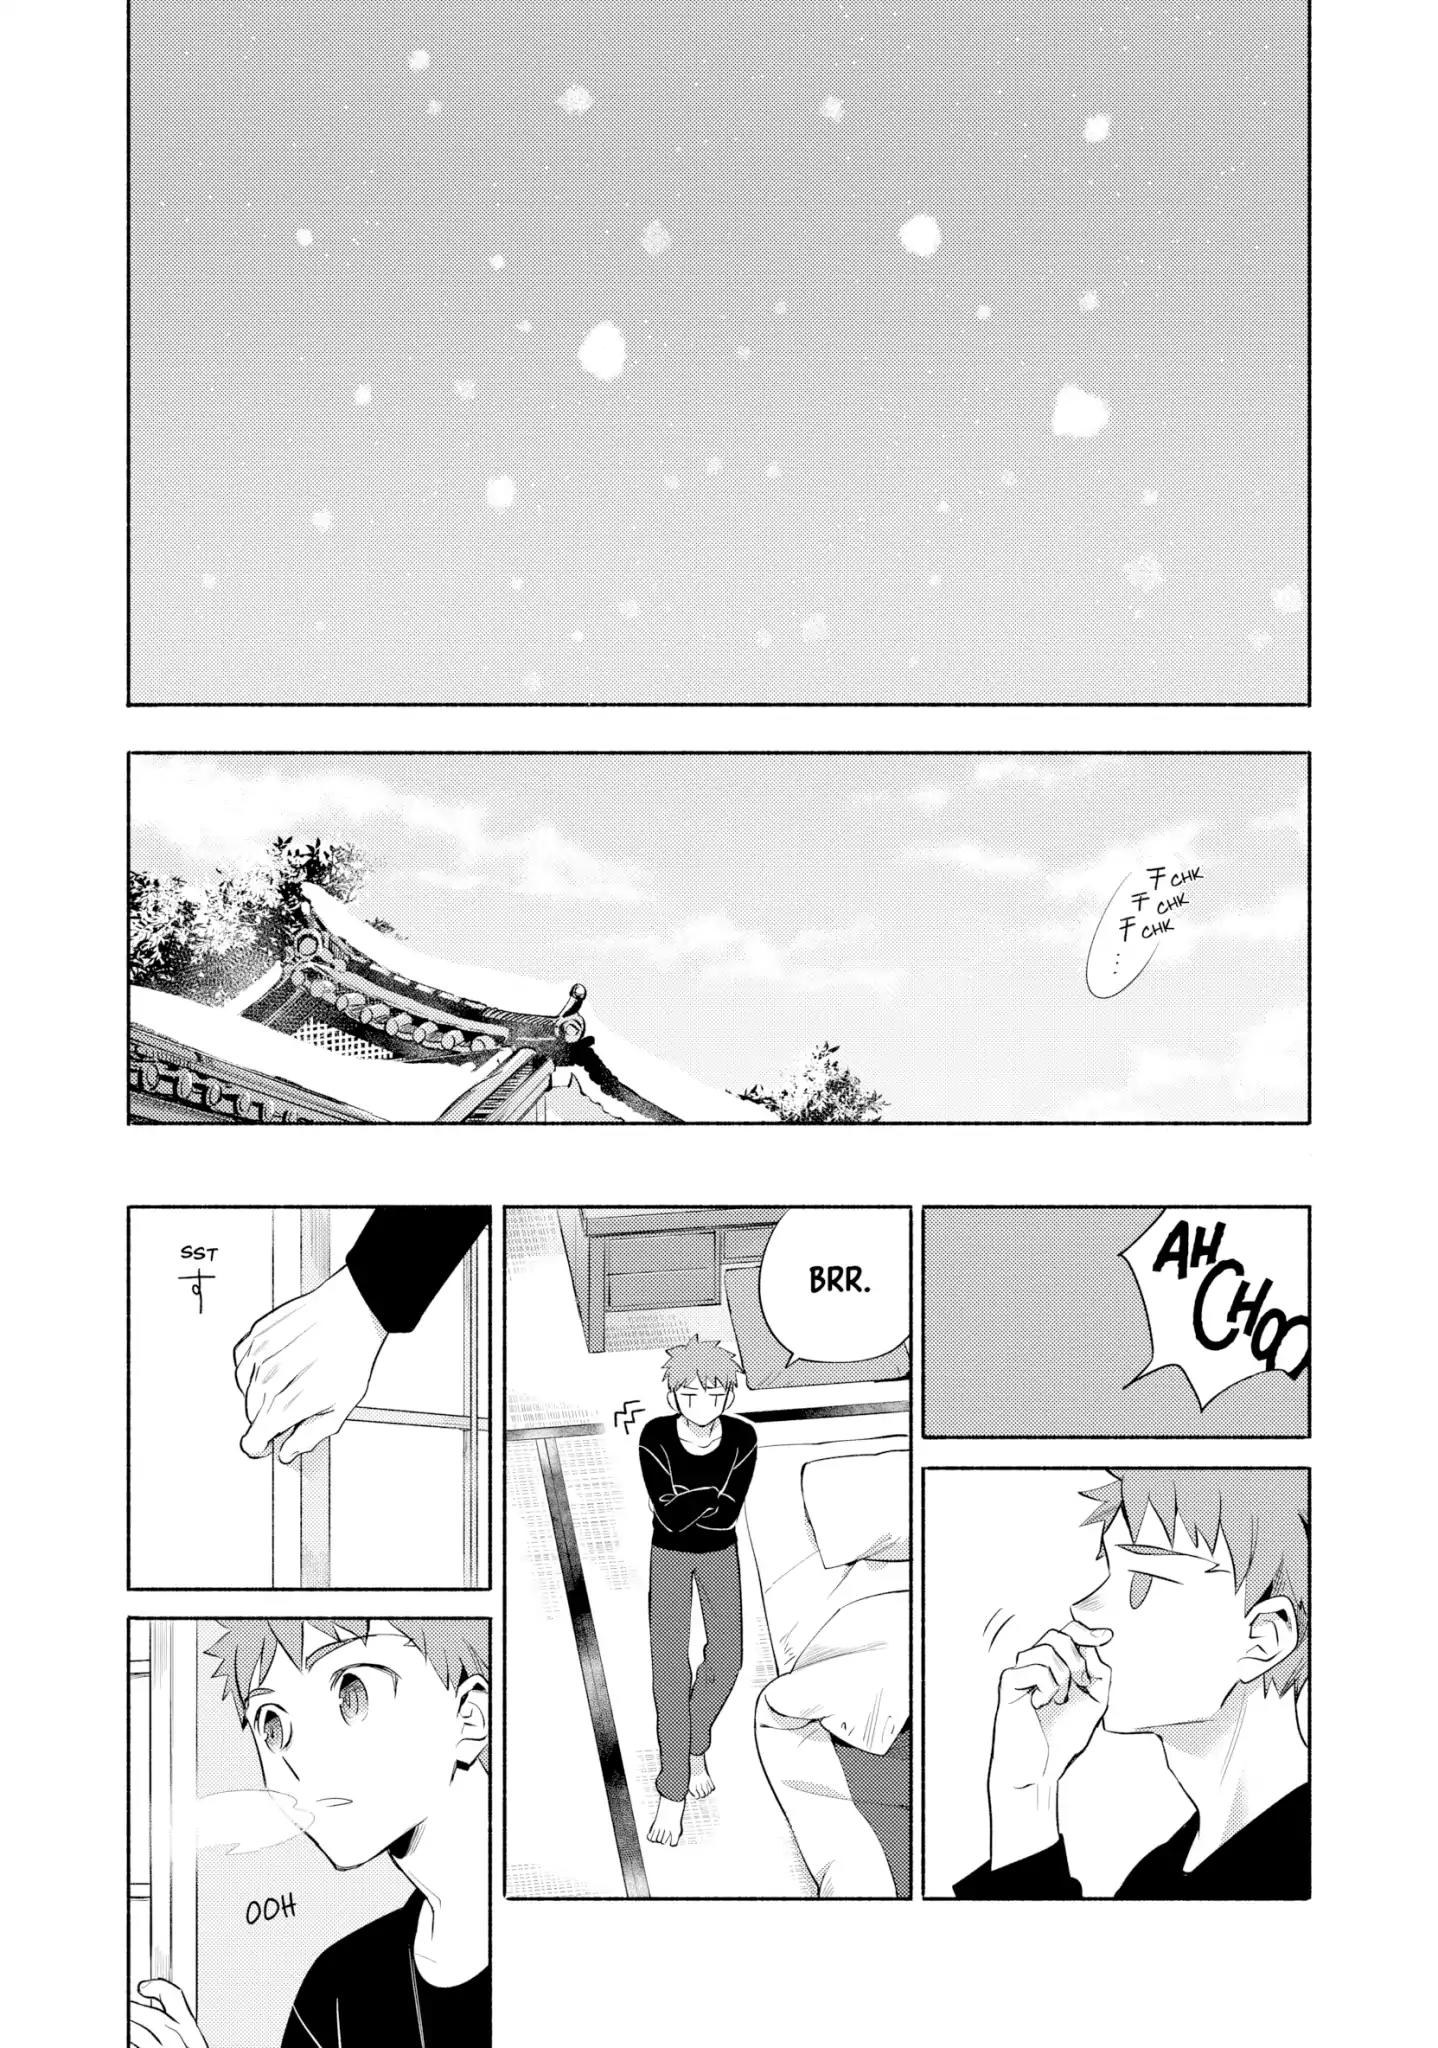 Emiya-san Chi no Kyou no Gohan Vol.2 Chapter 12: Winter Standards: